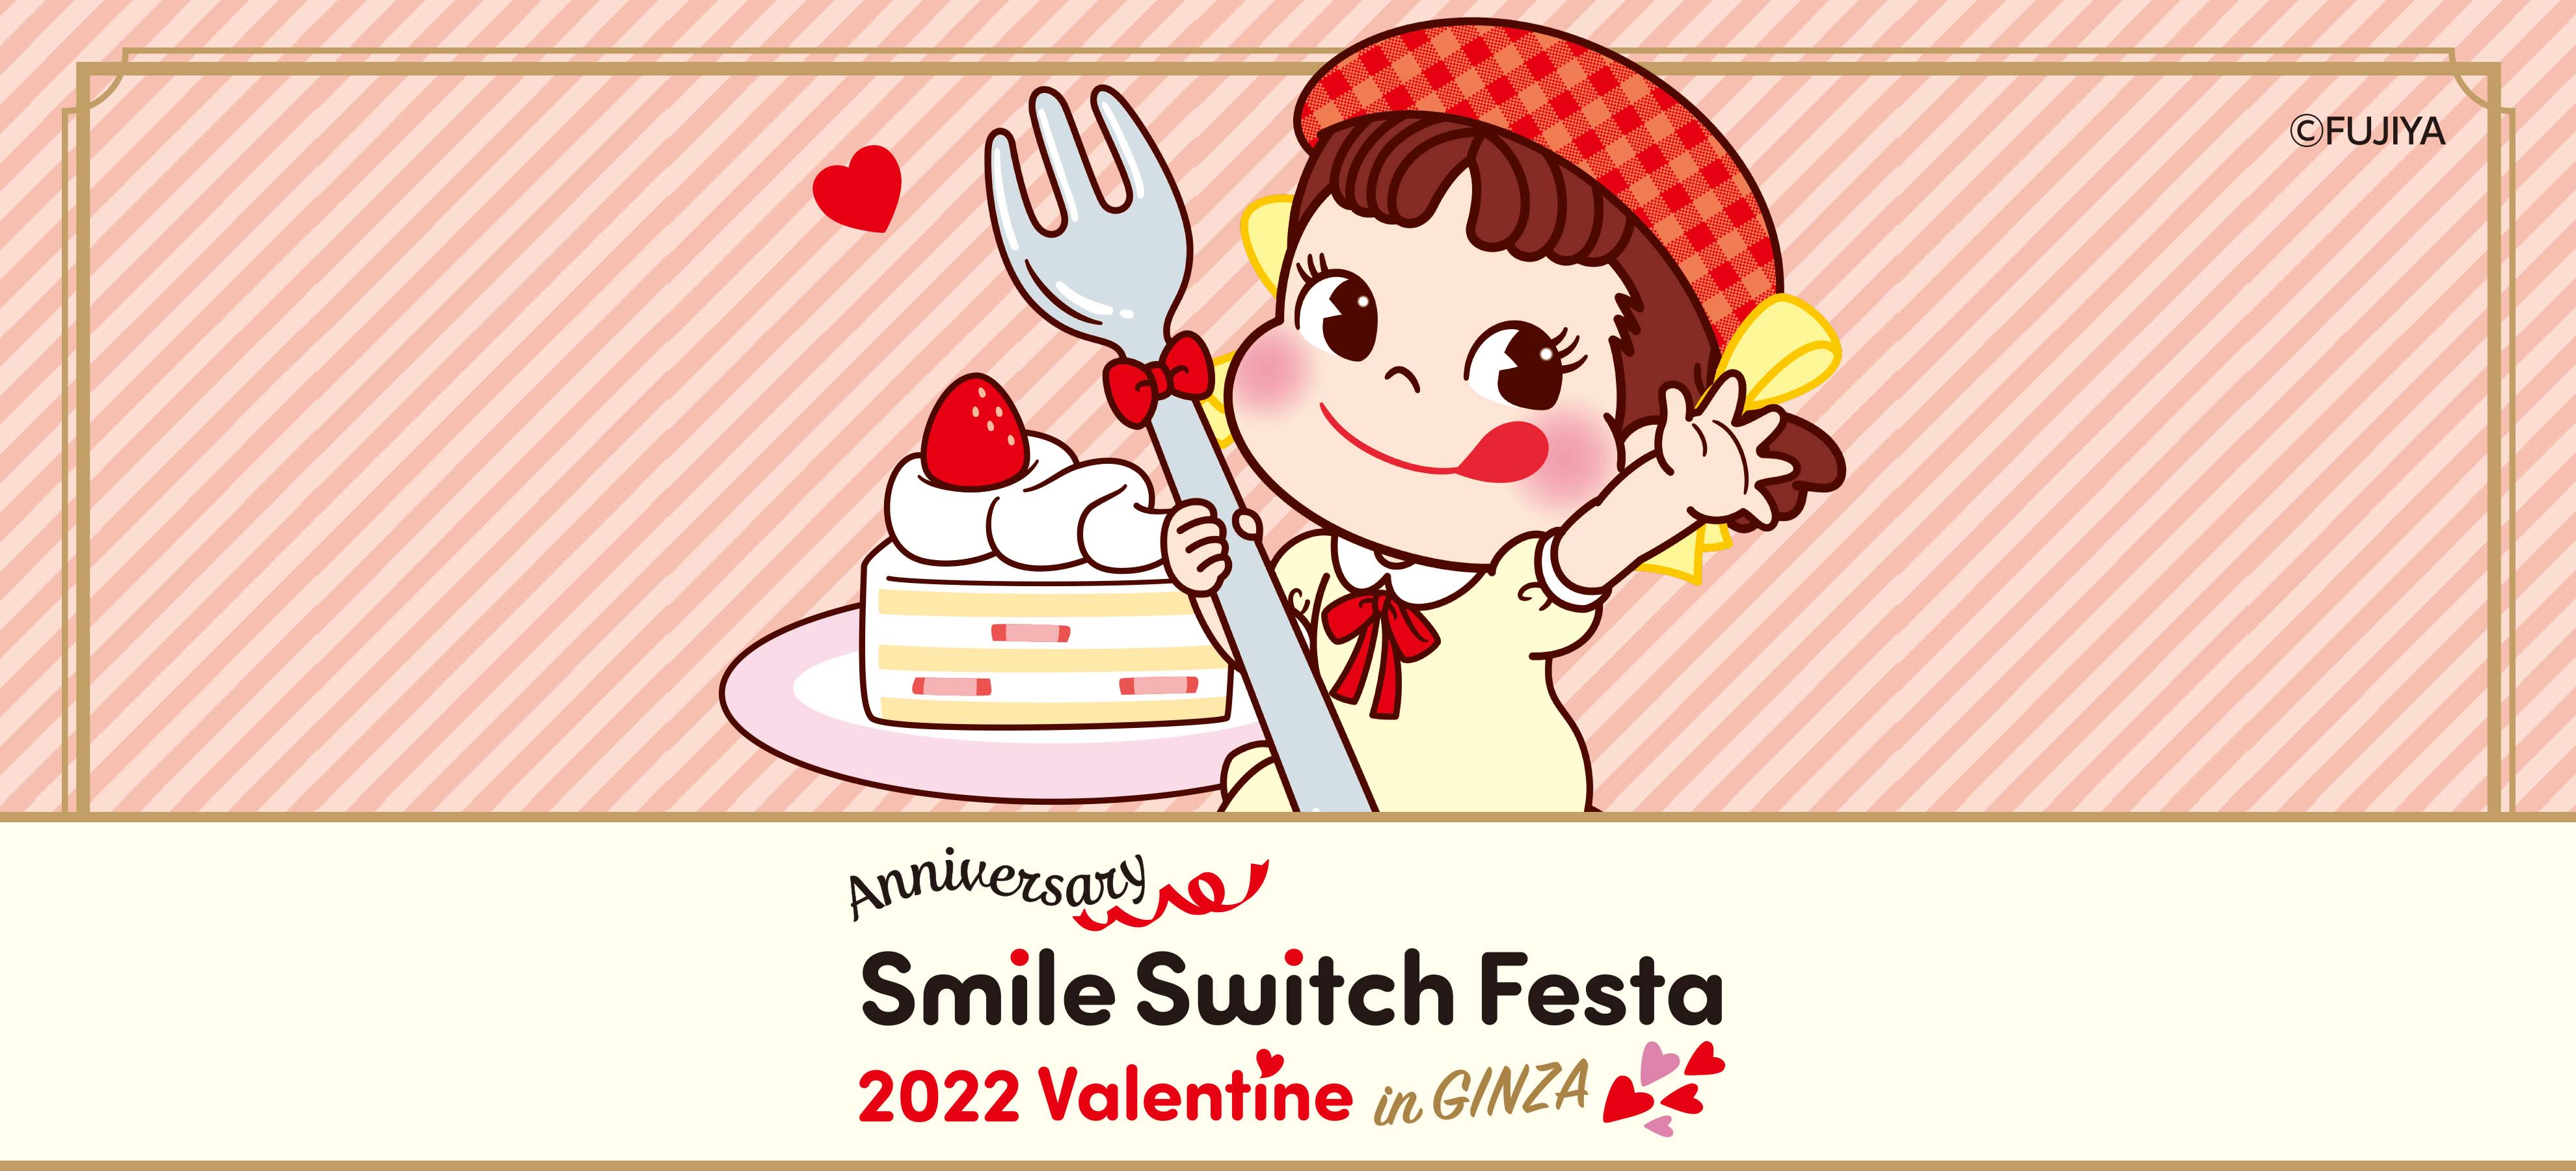 FUJIYA Smile Switch Festa 2022 Valentine in GINZA